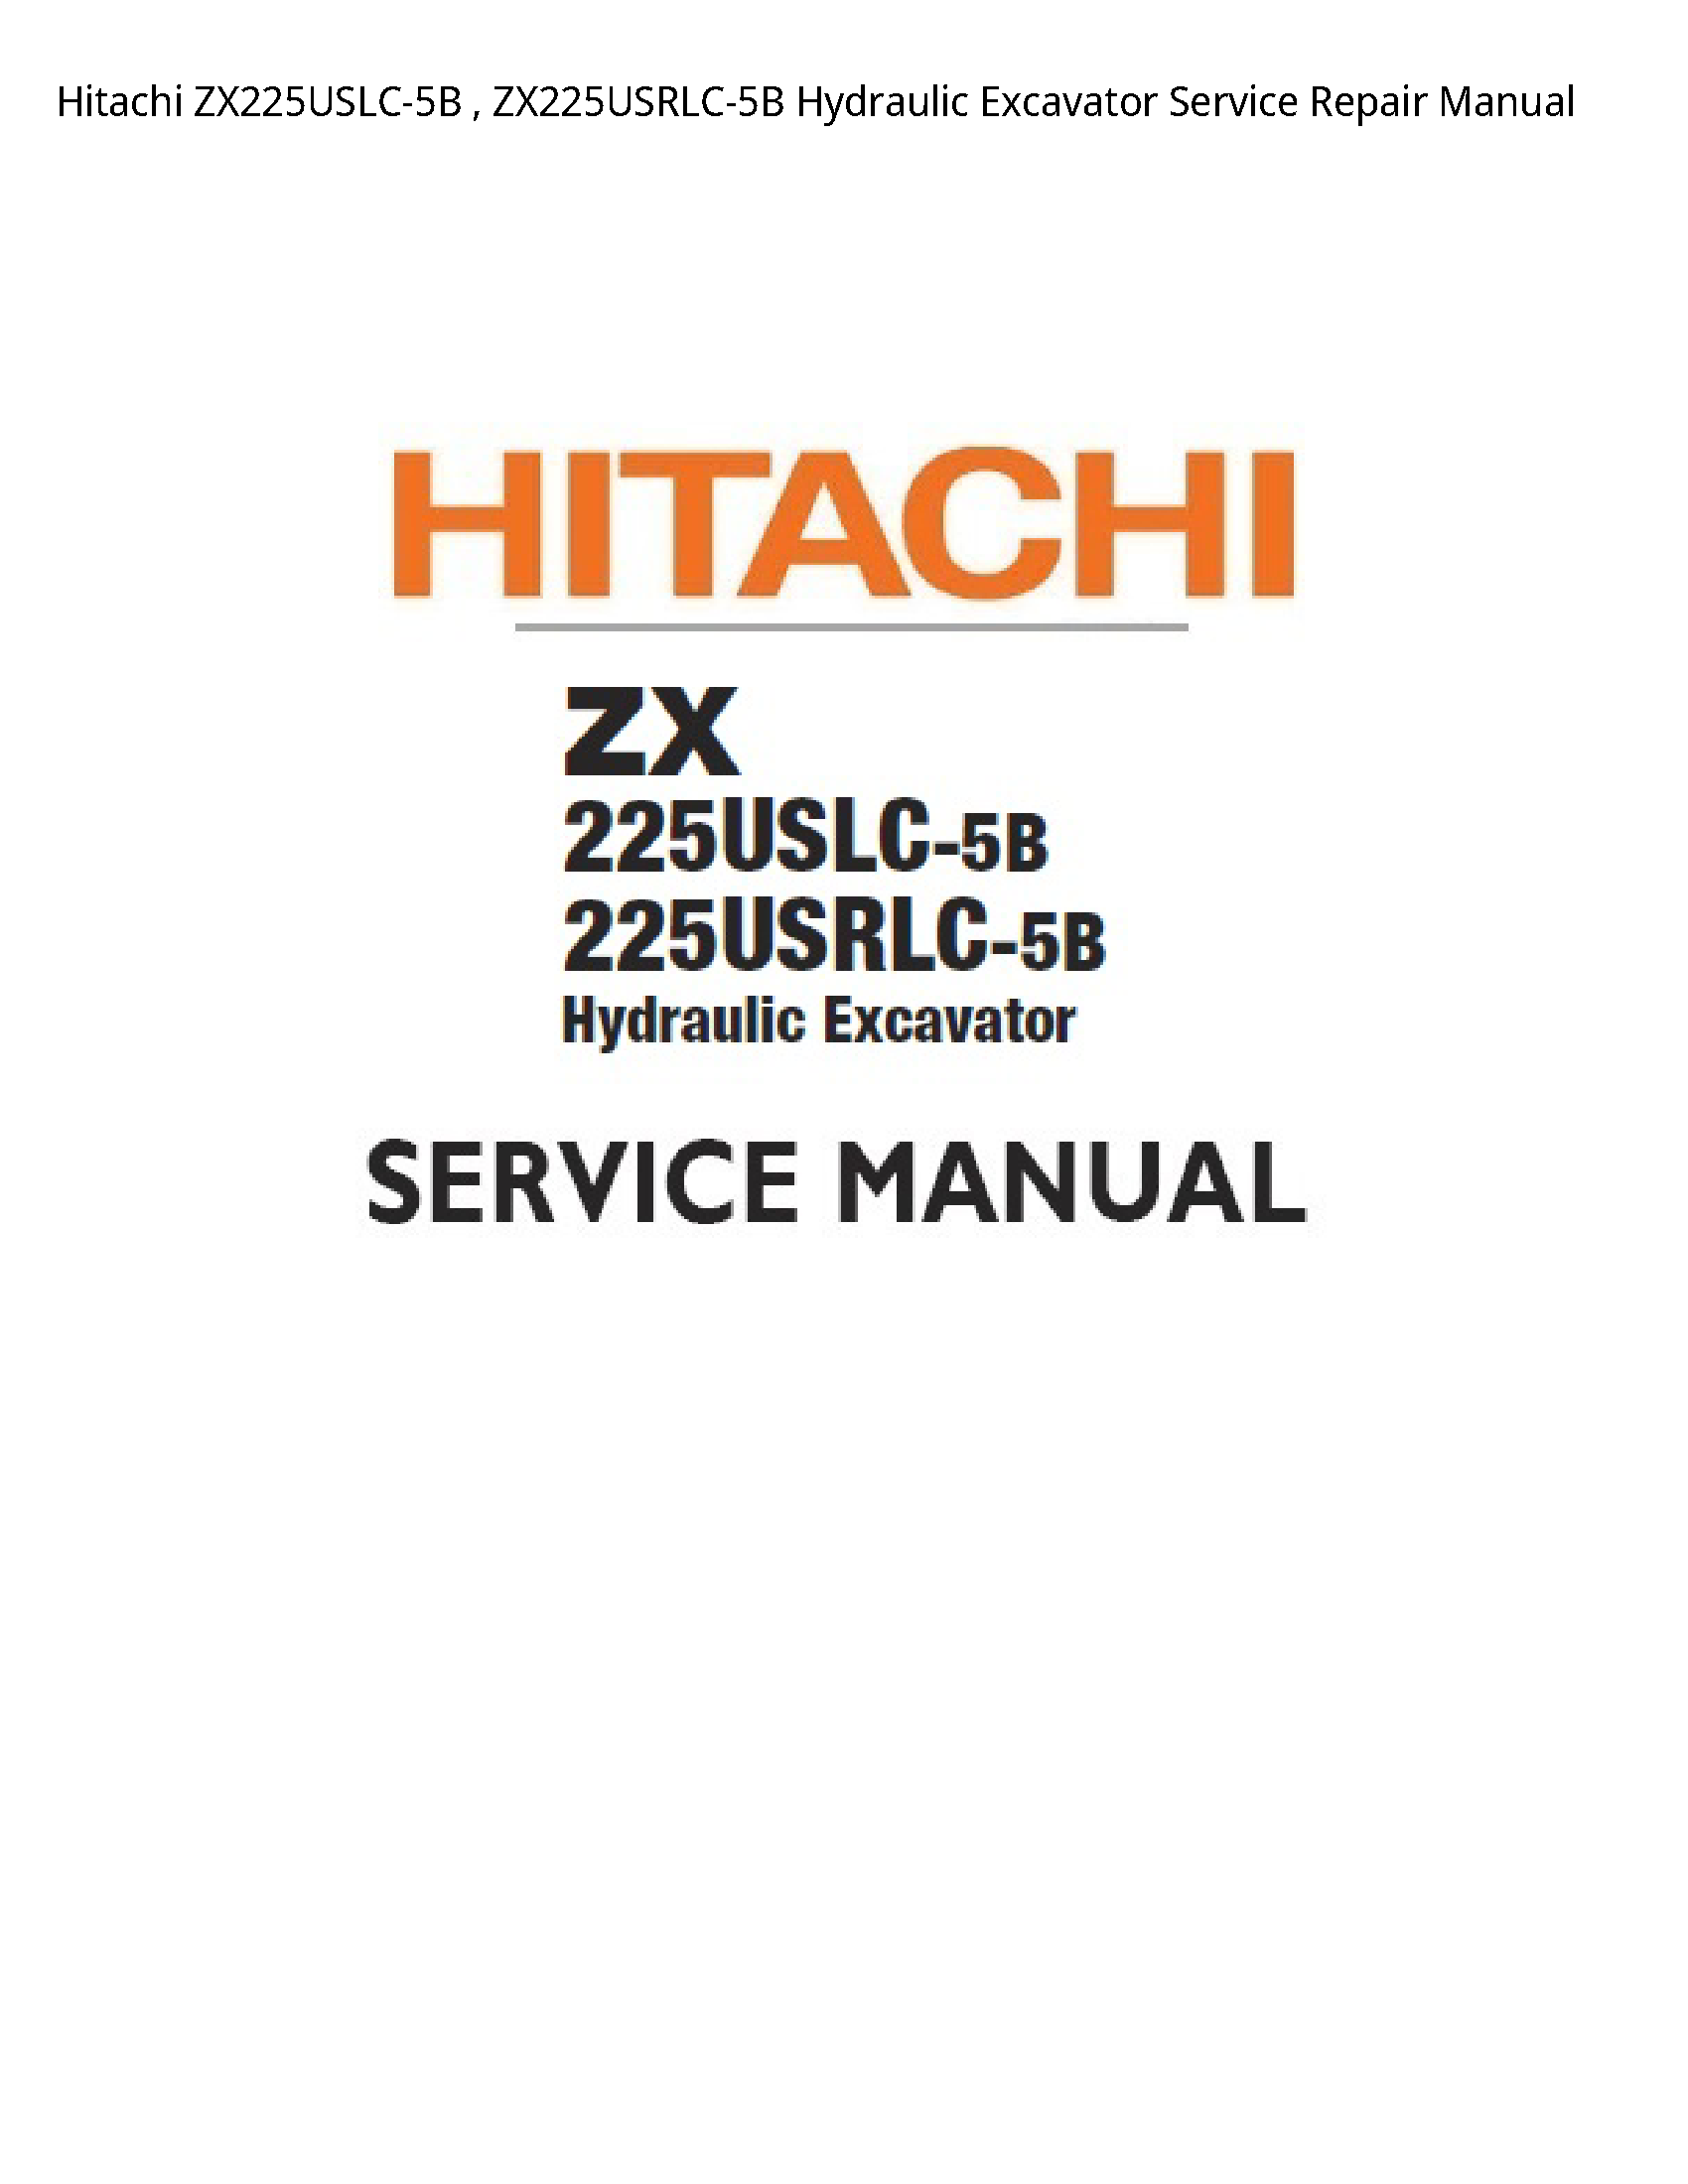 Hitachi ZX225USLC-5B Hydraulic Excavator manual